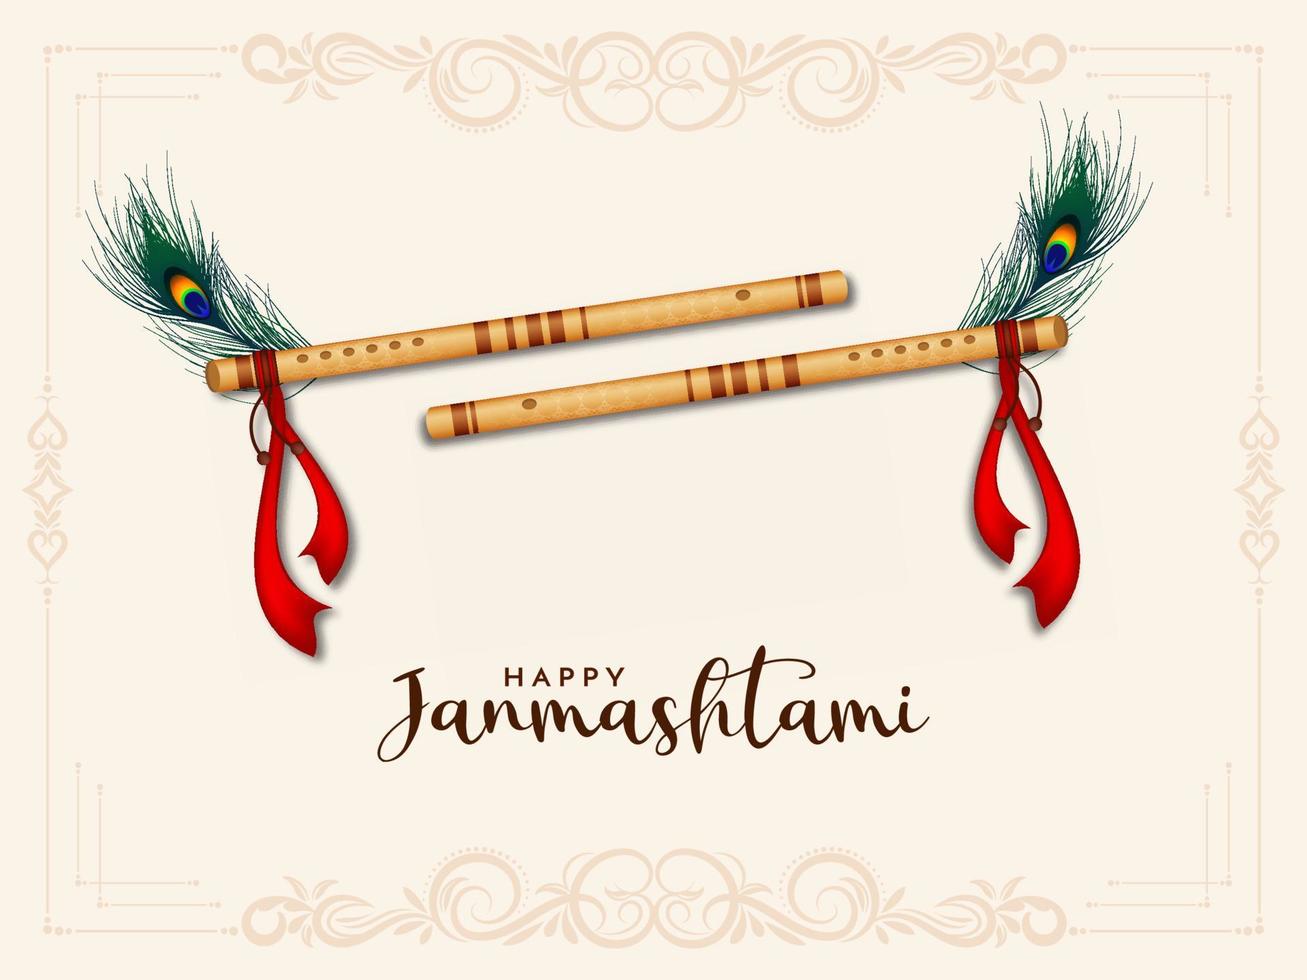 gelukkig janmashtami festival achtergrond met fluiten vector